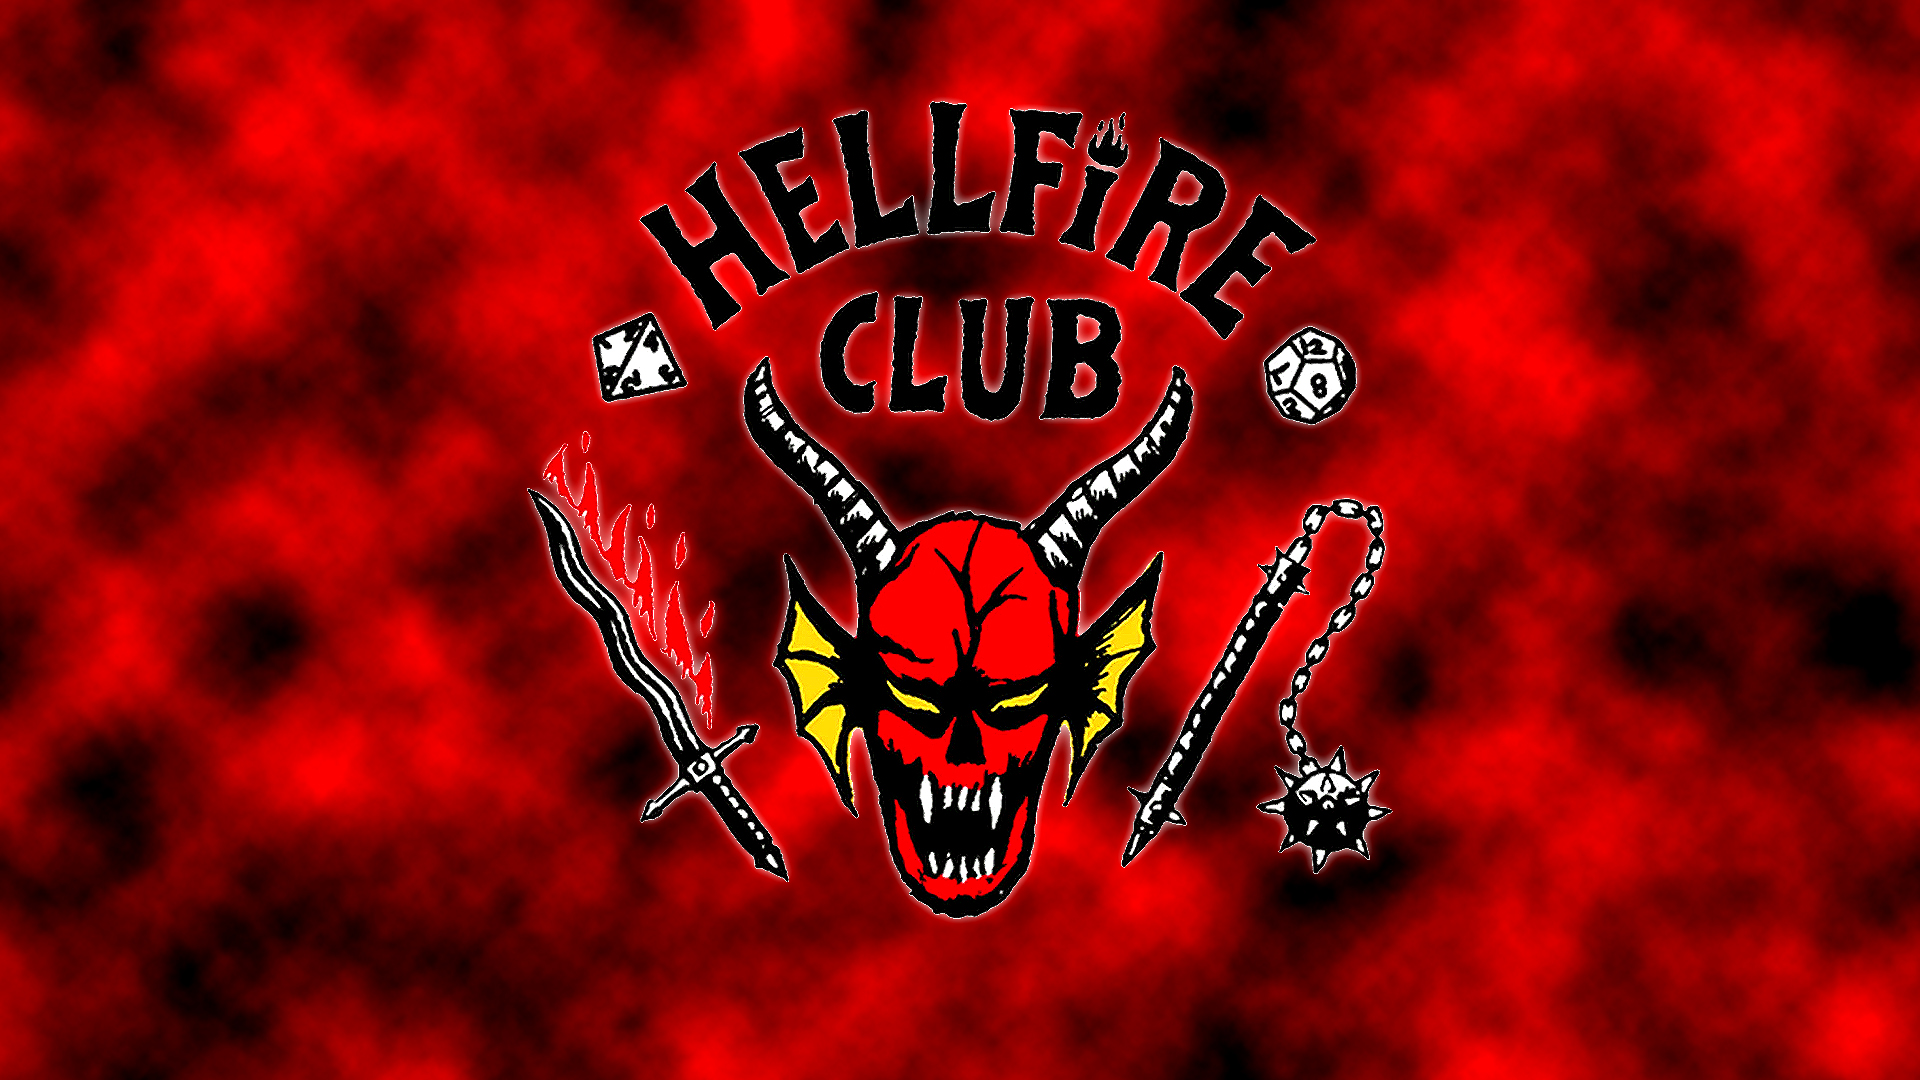 HELLFIRE CLUB WALLPAPER by BebeYodha on DeviantArt